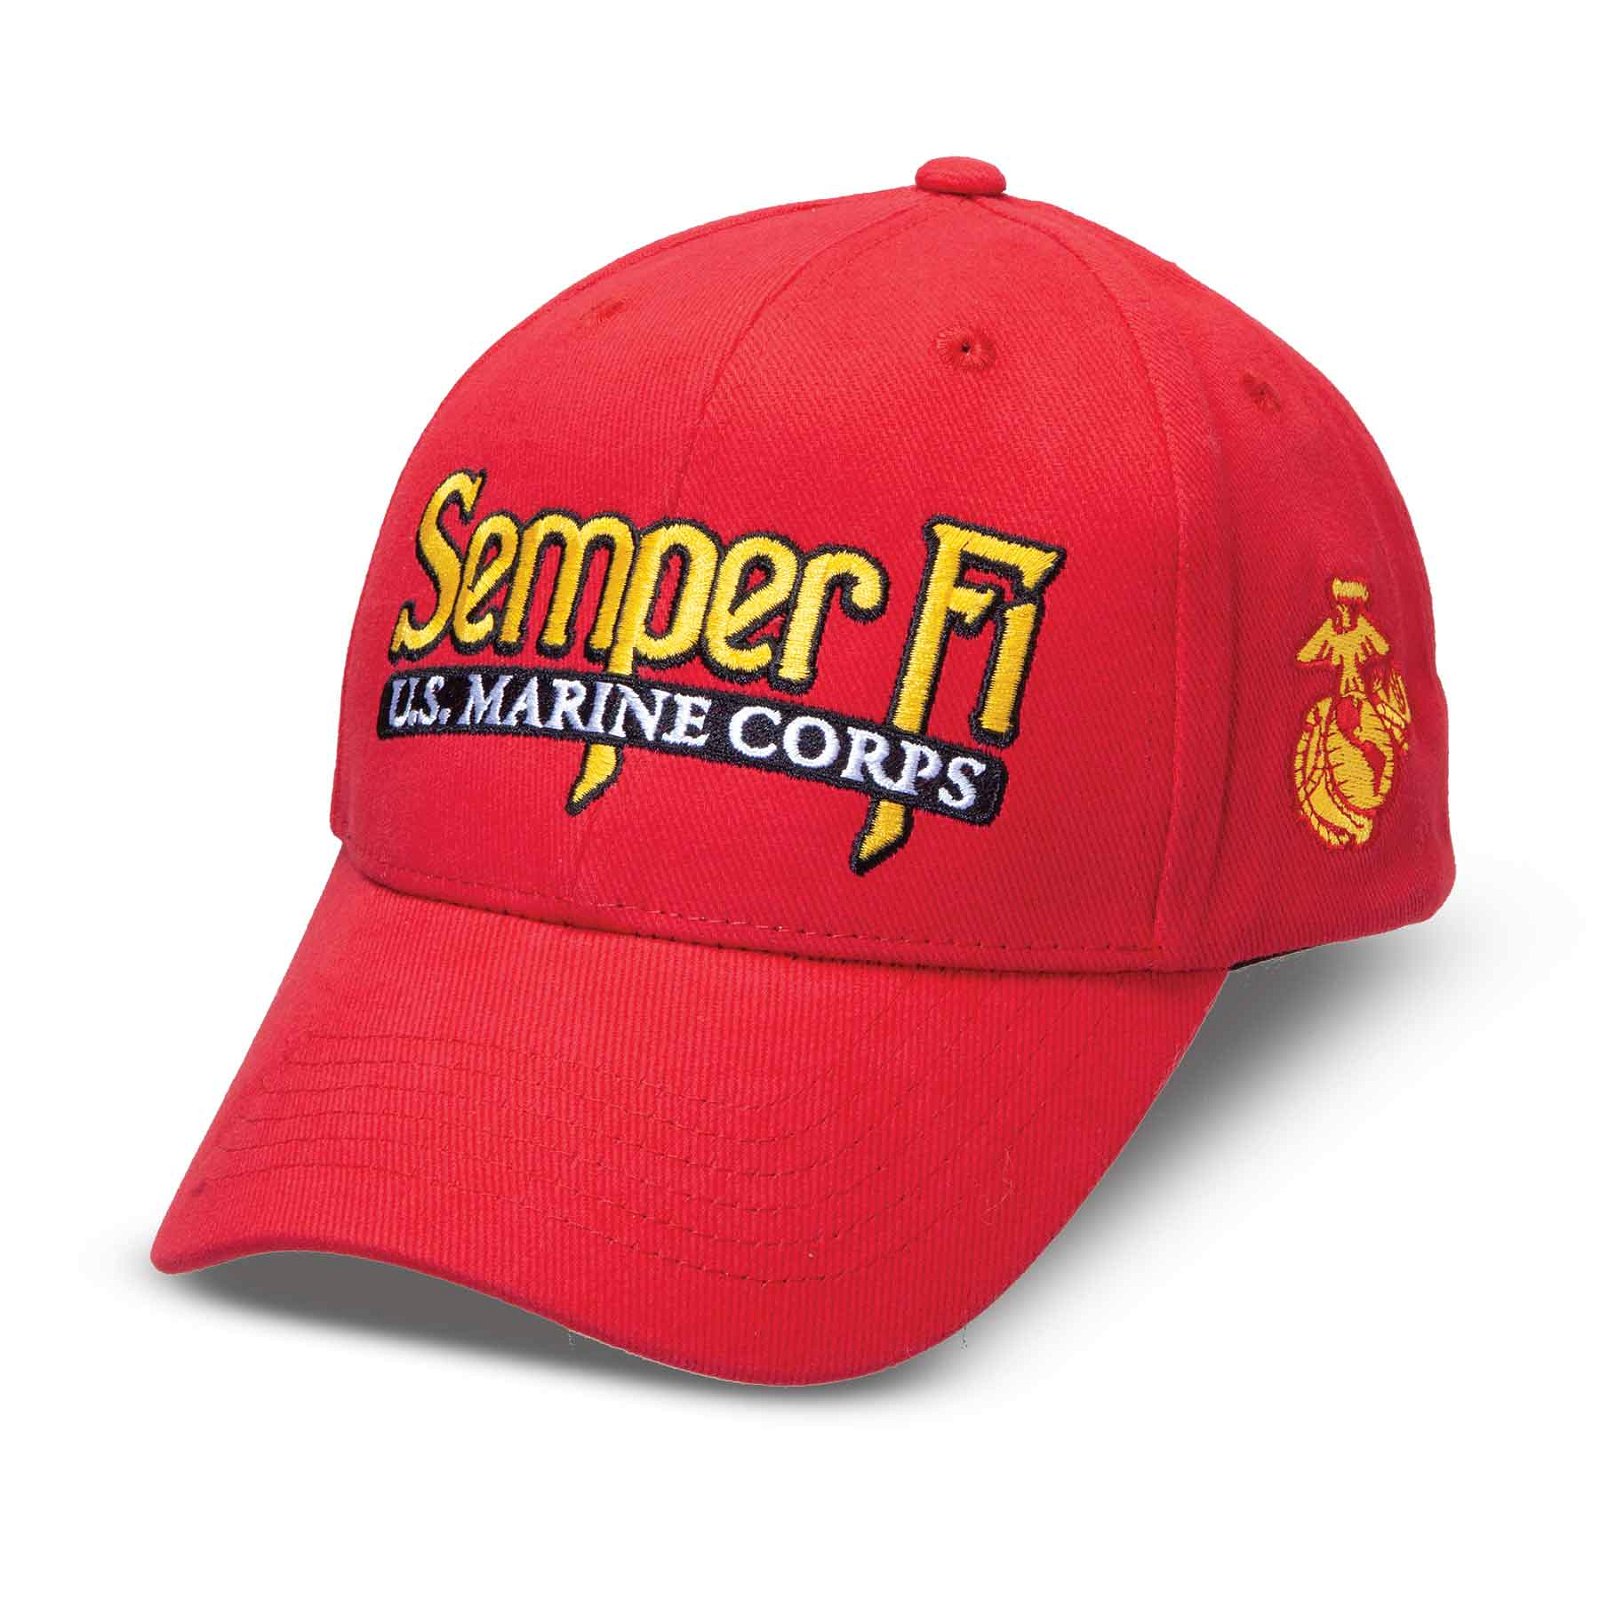 Image of Semper Fi U.S. Marine Corps Hat- Red